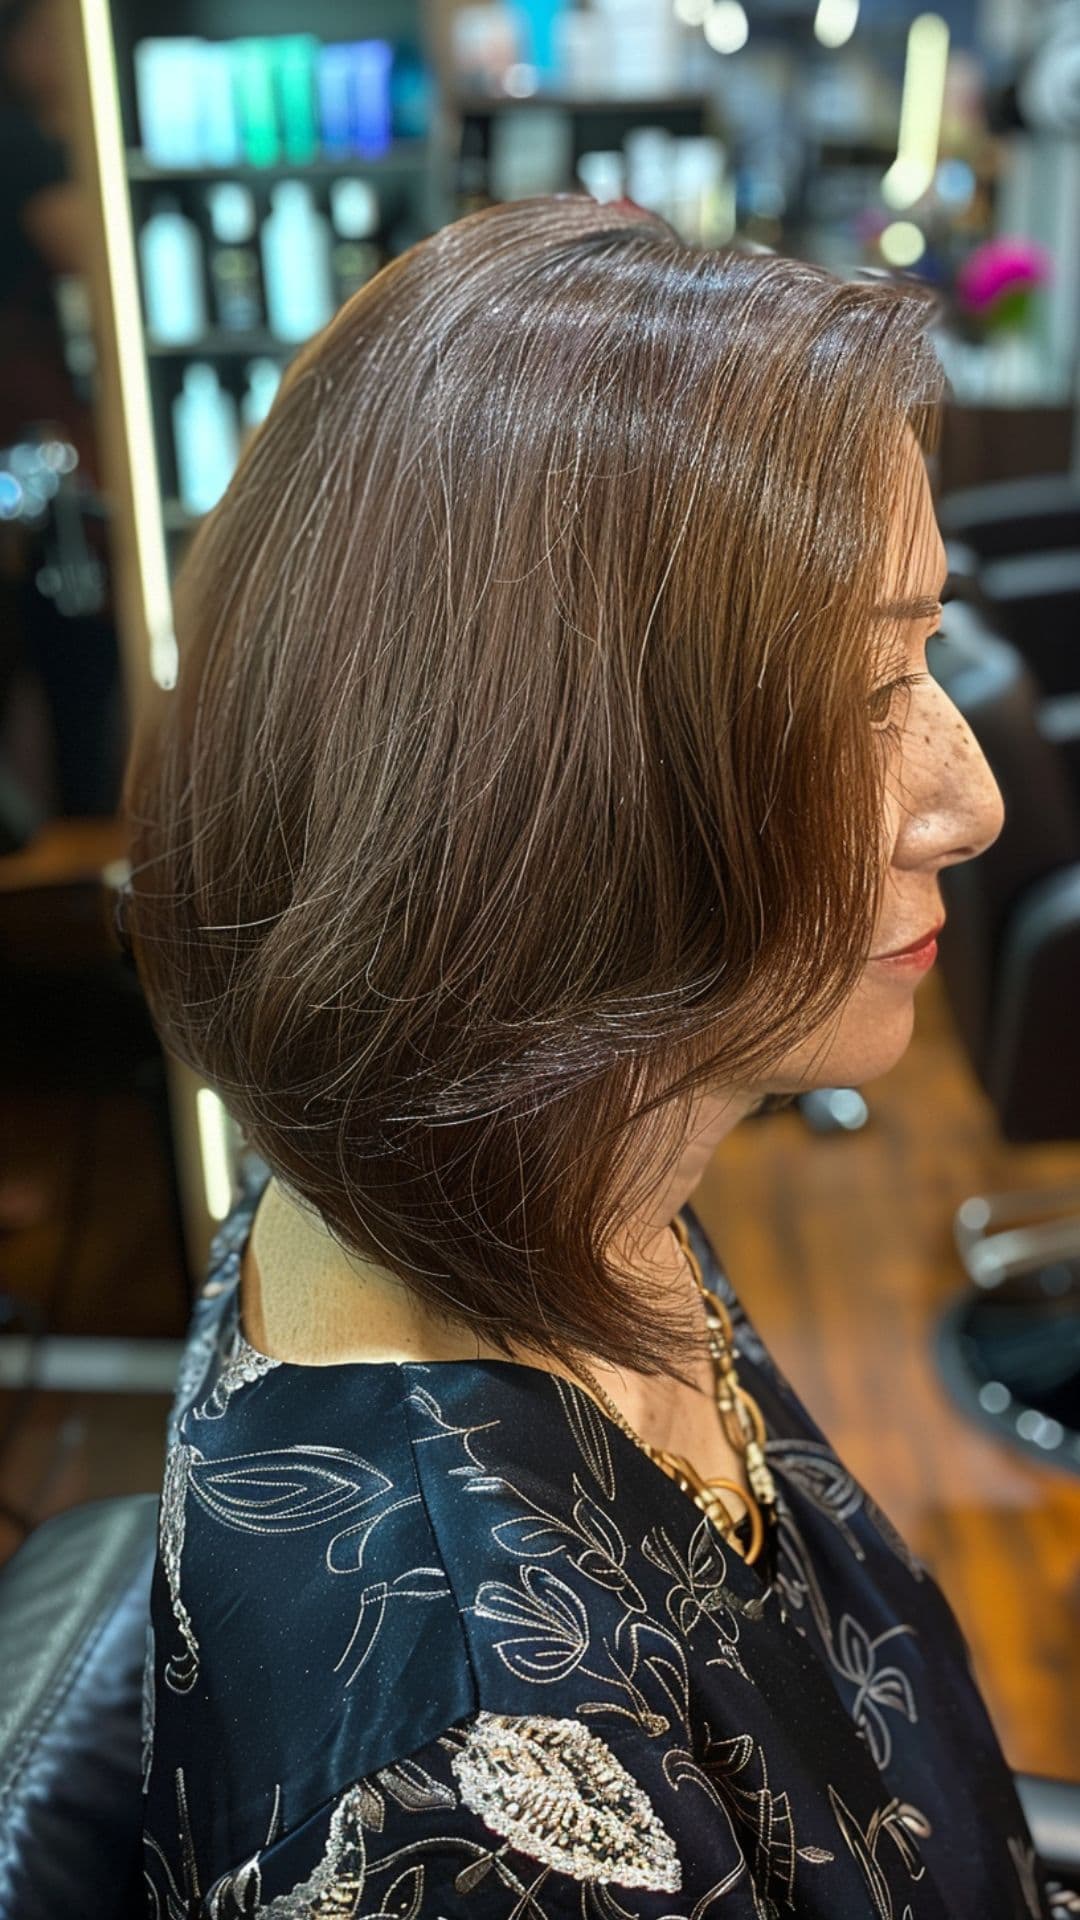 An older woman modelling a long inverted bob haircut.